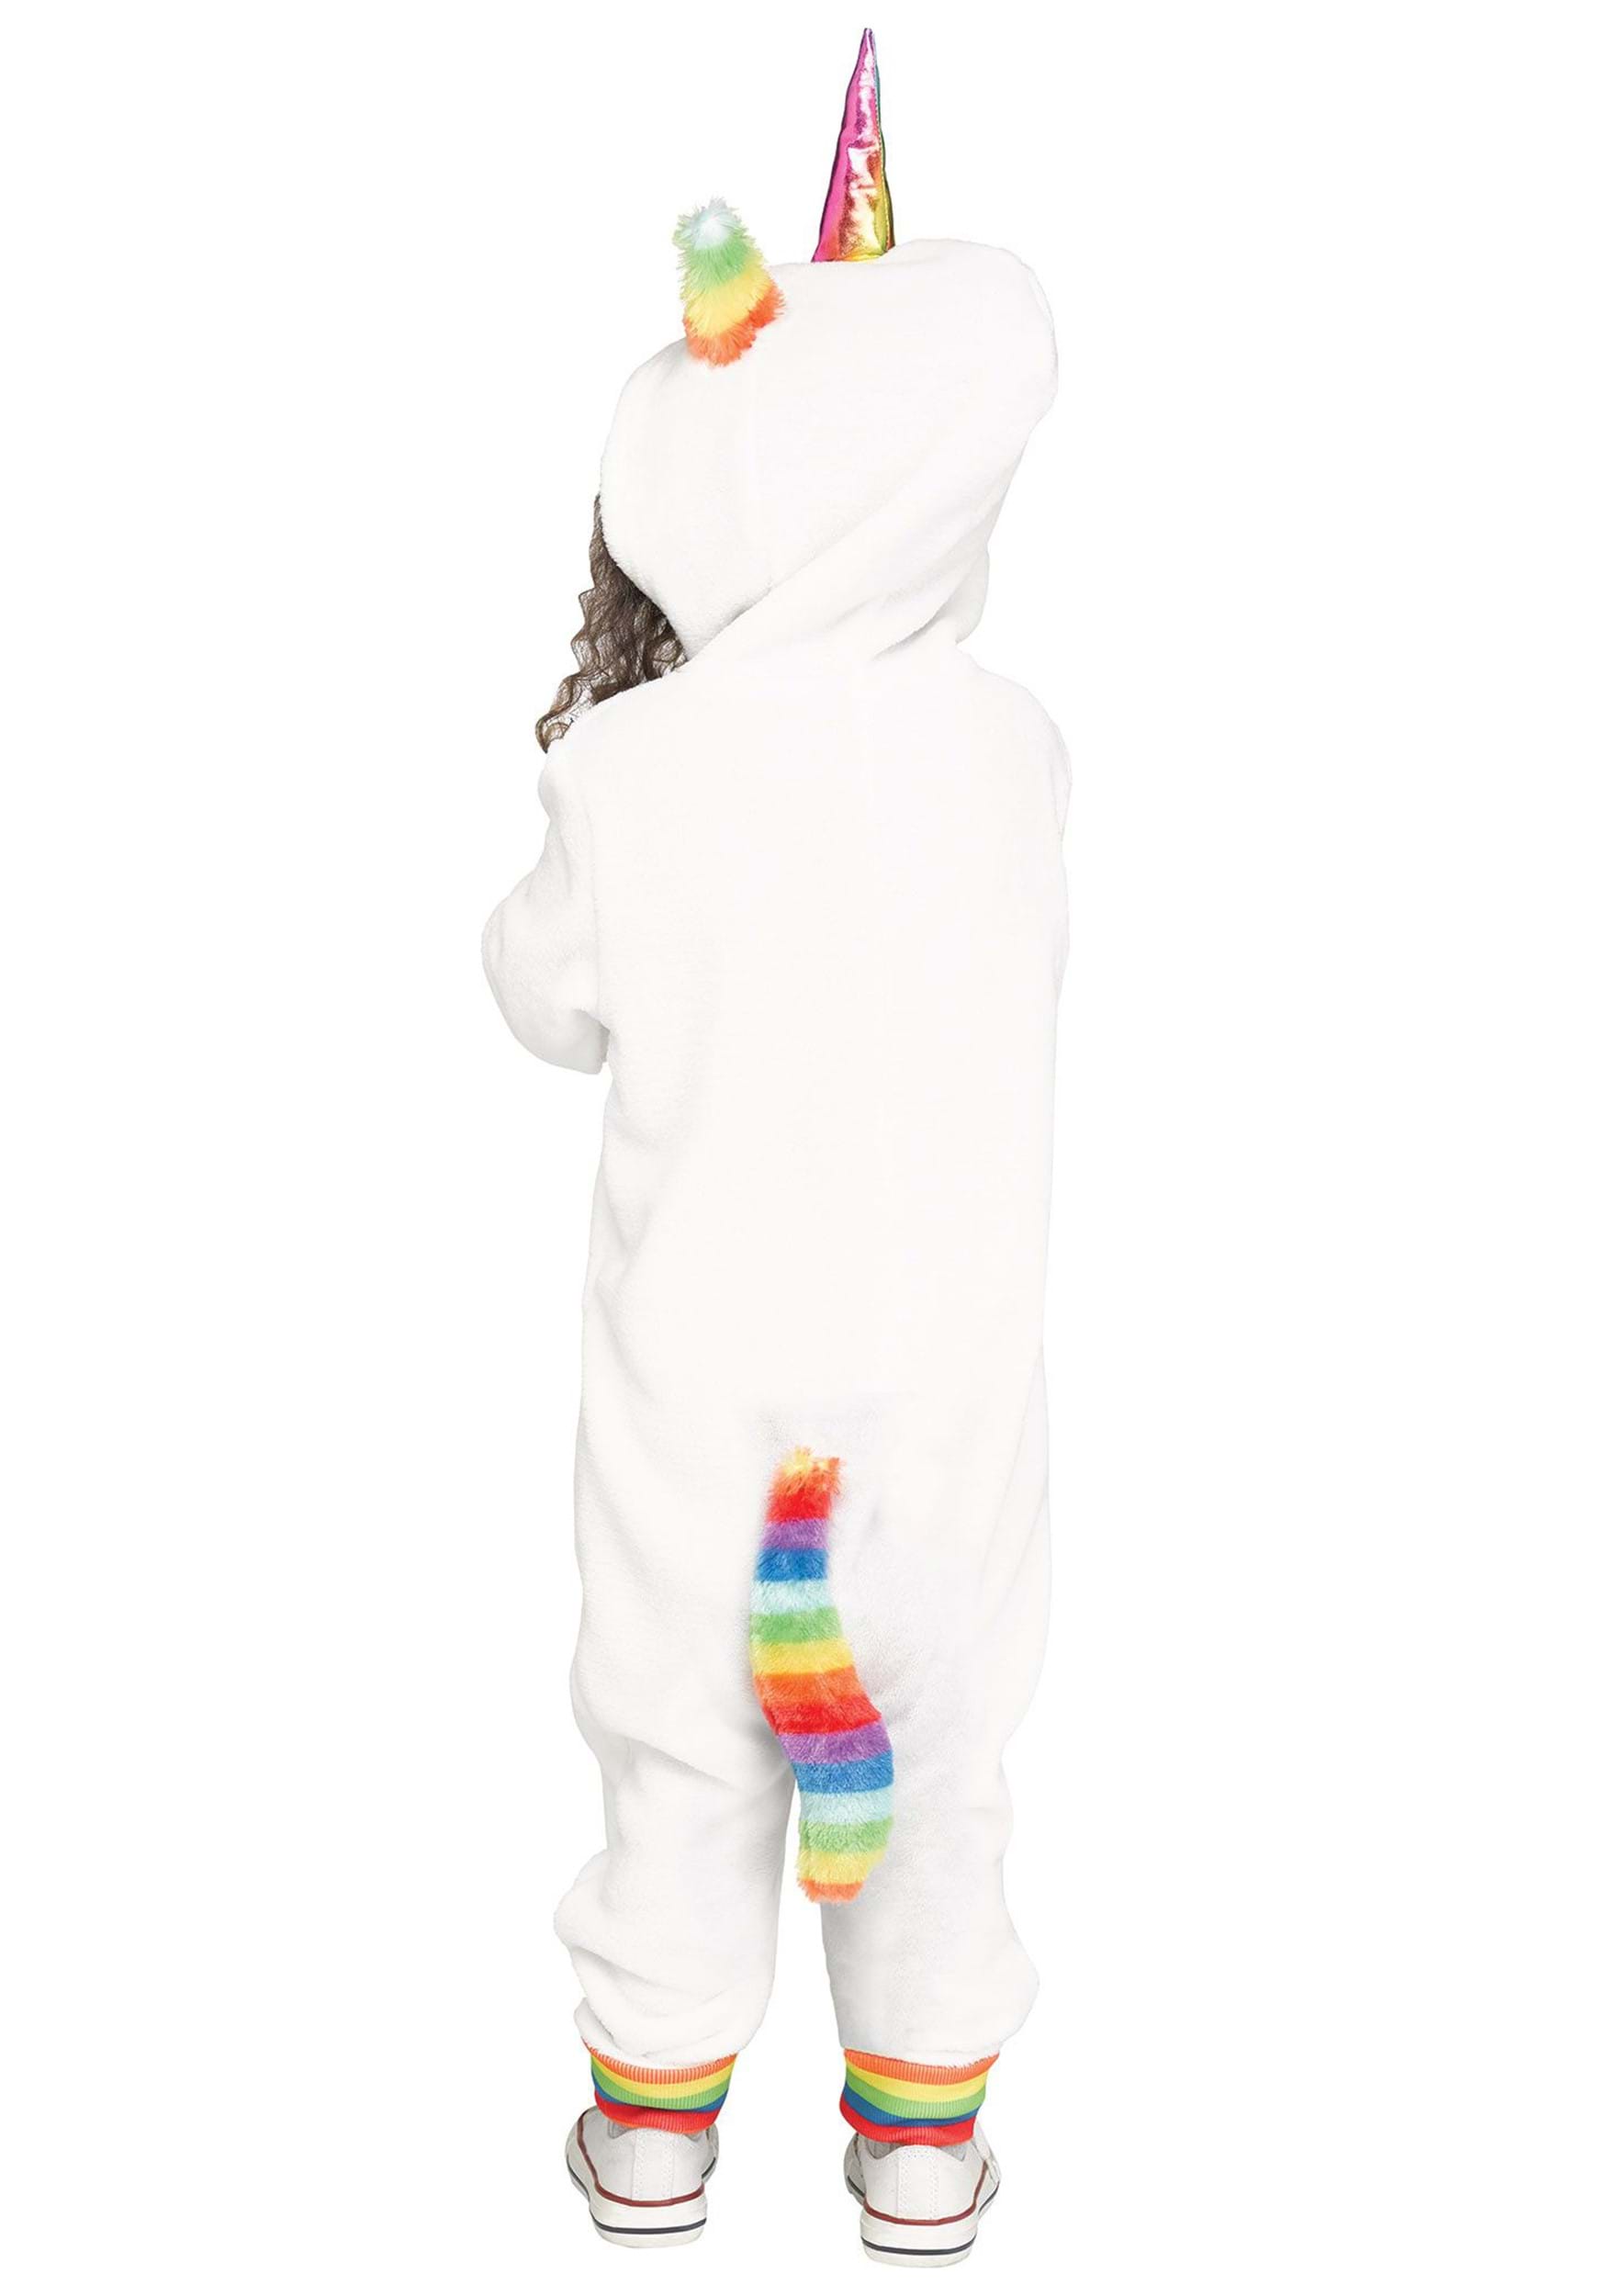 Rainbow Unicorn Girls Toddler Fairytale Fantasy Hooded Halloween Costume